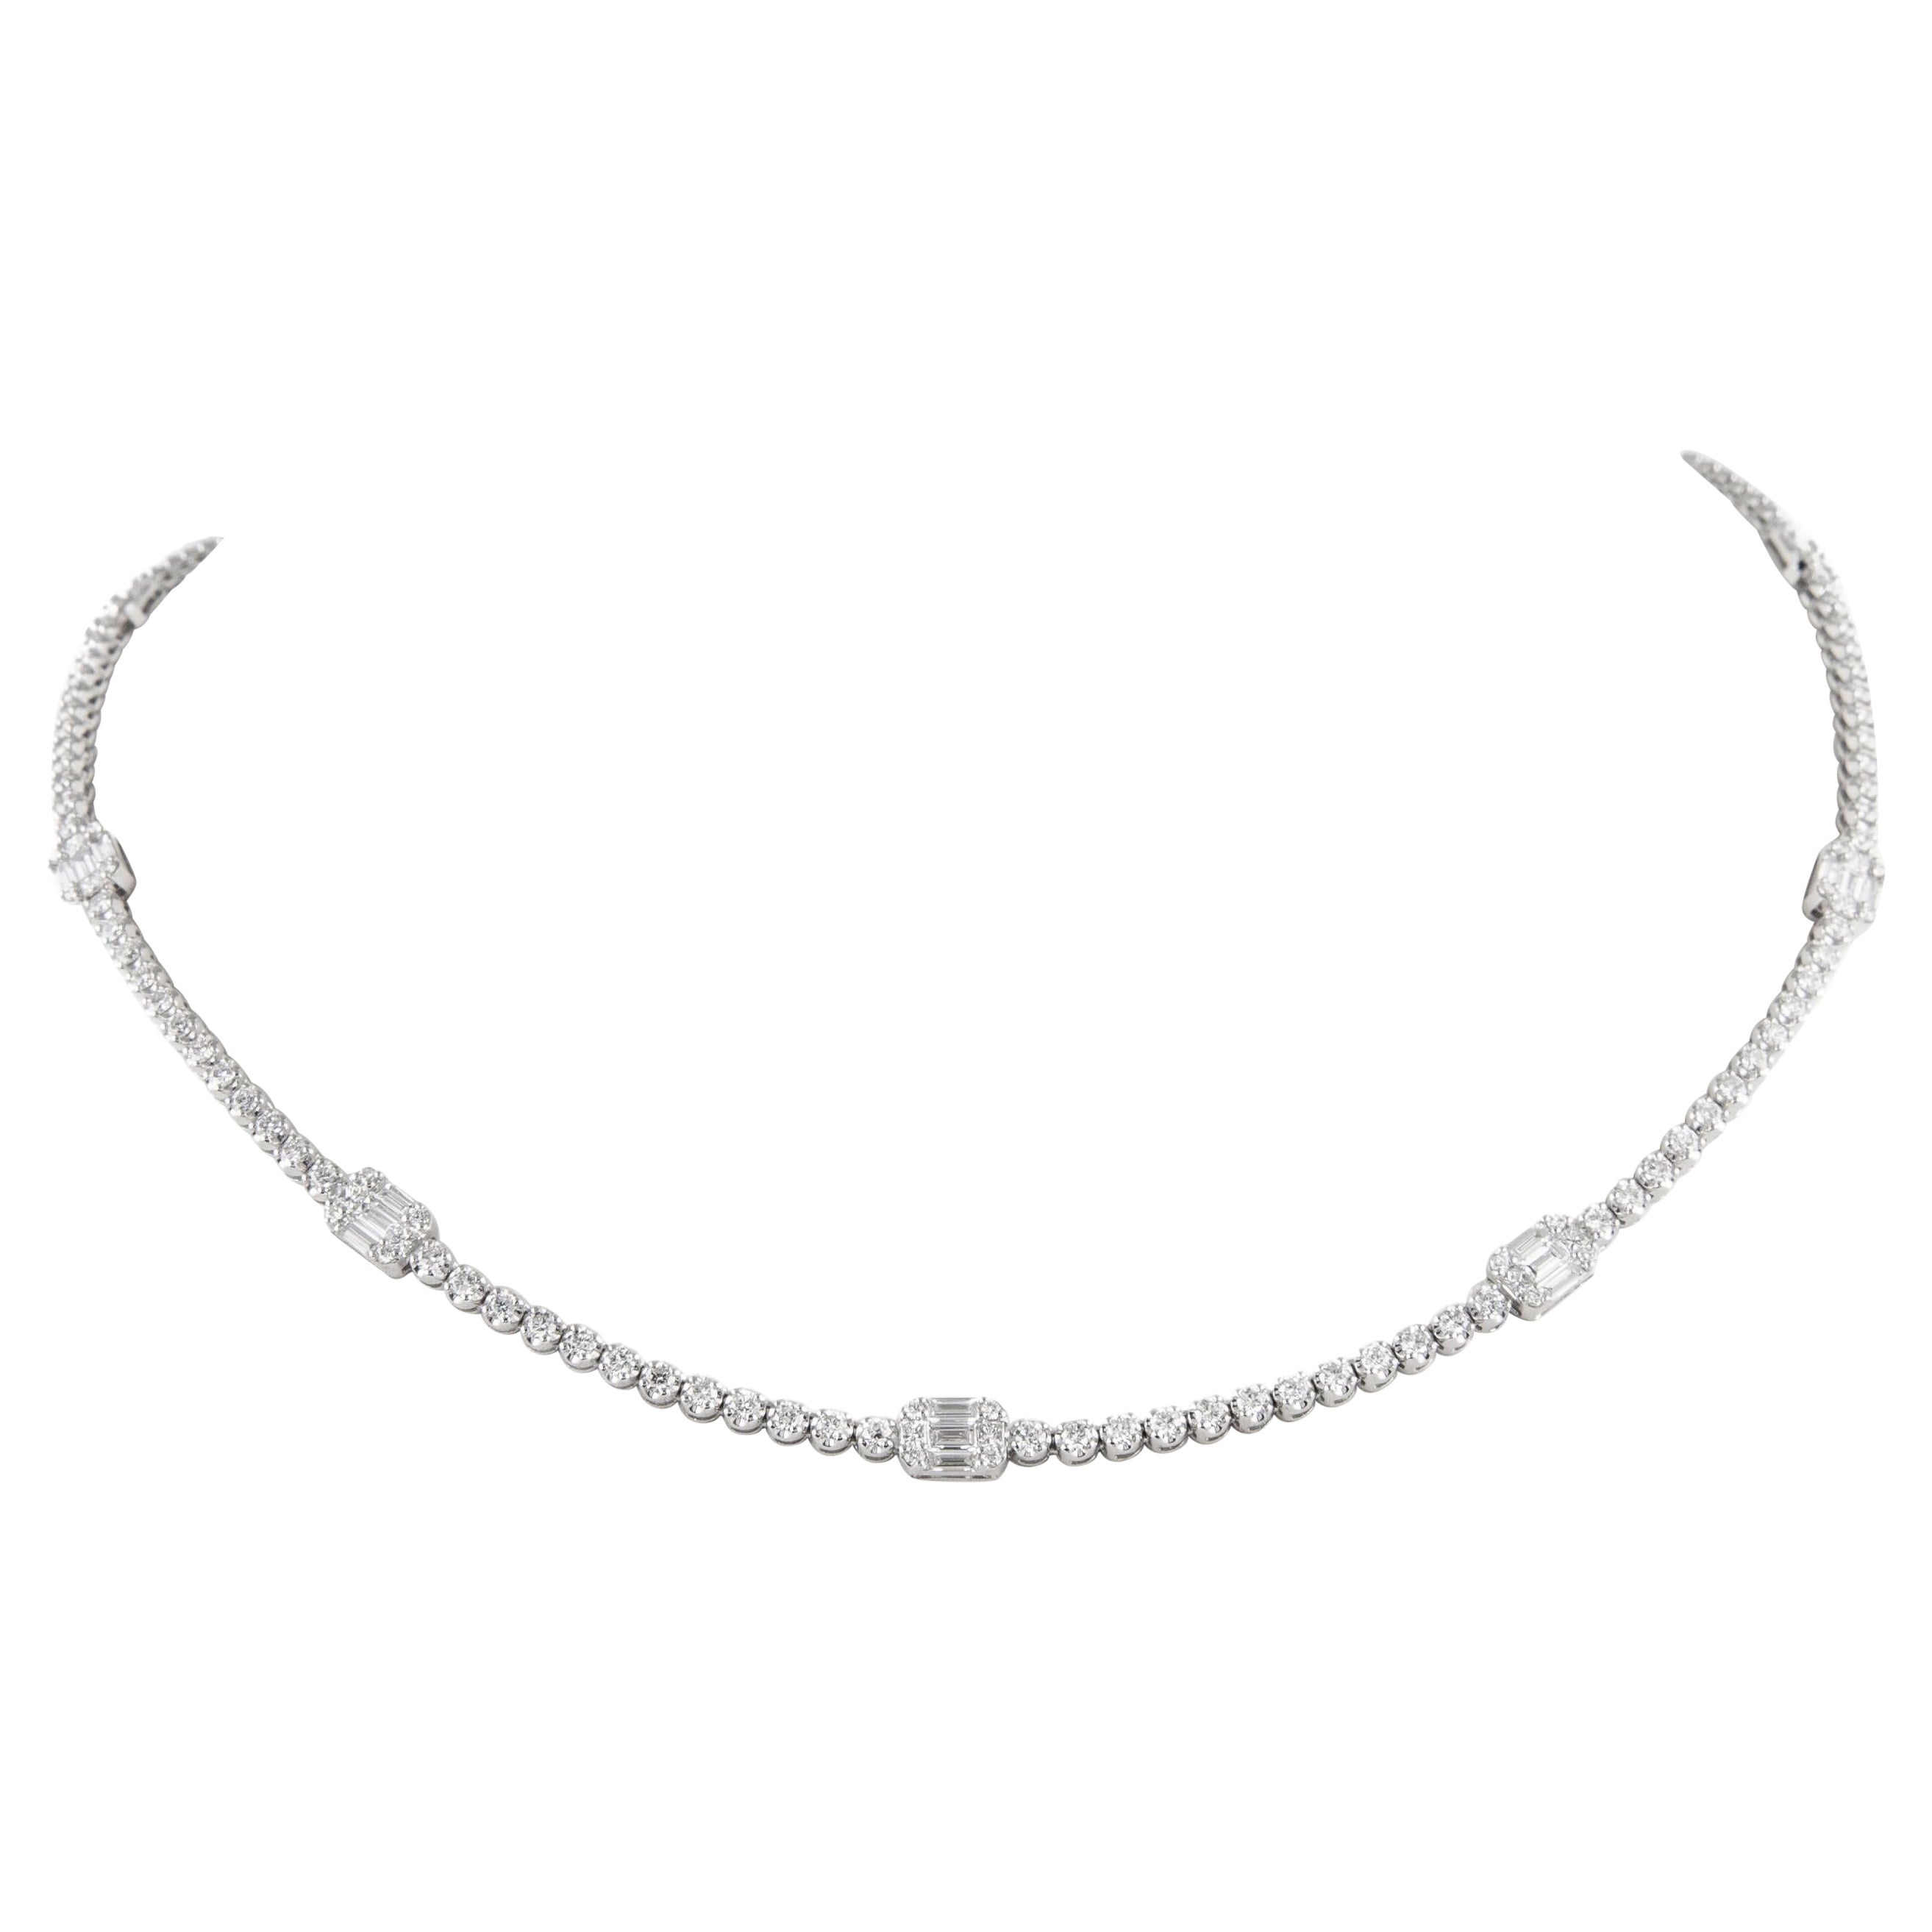 Alexander 5.86 Carat Diamond Tennis Necklace 18 Karat White Gold